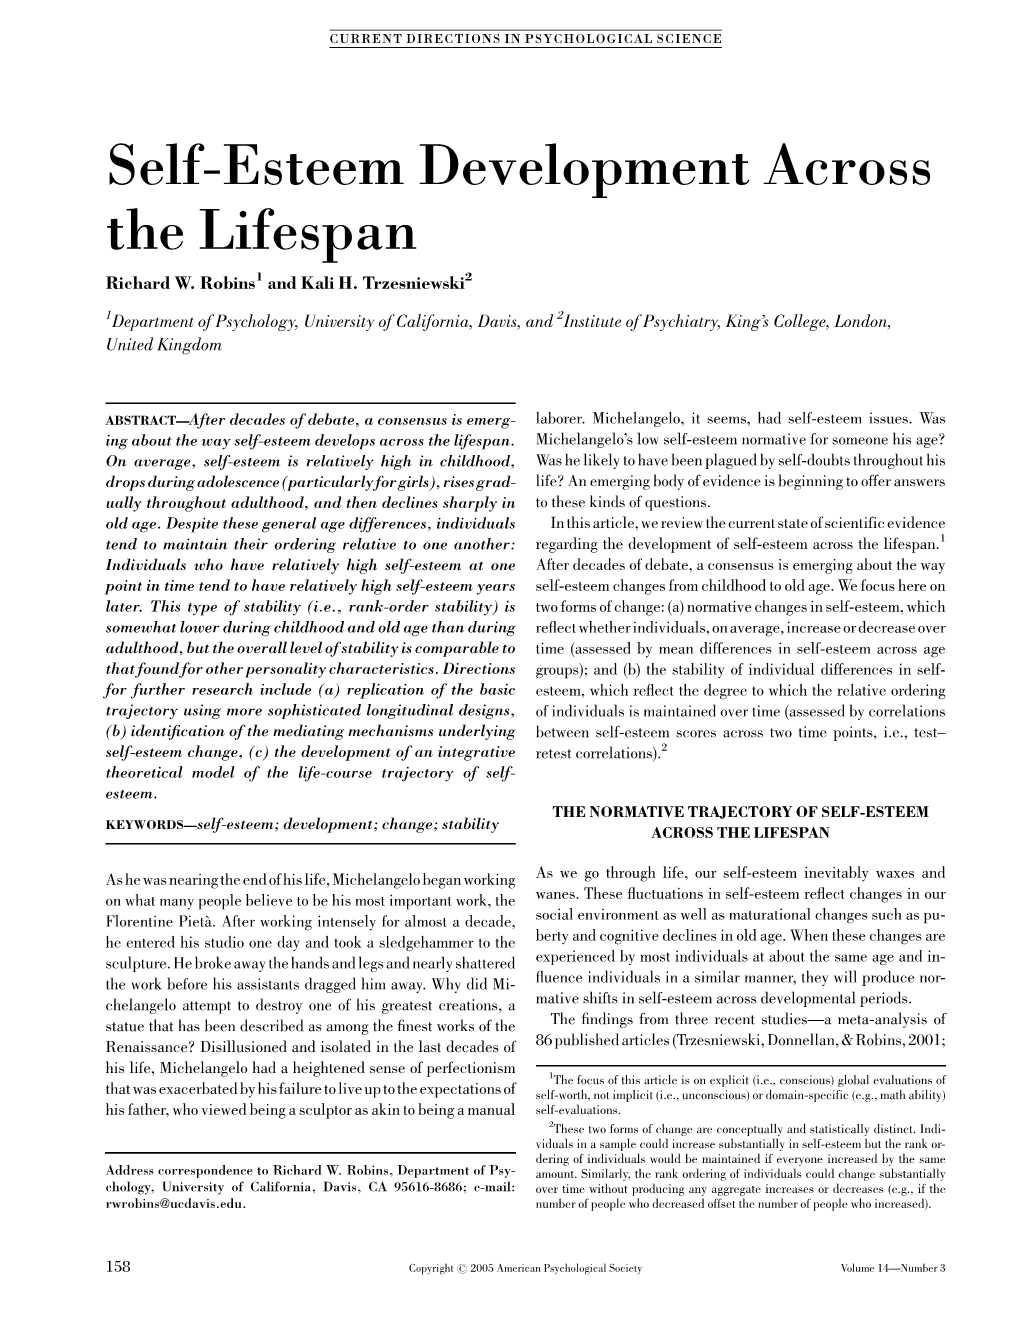 Self-Esteem Development Across the Lifespan Richard W